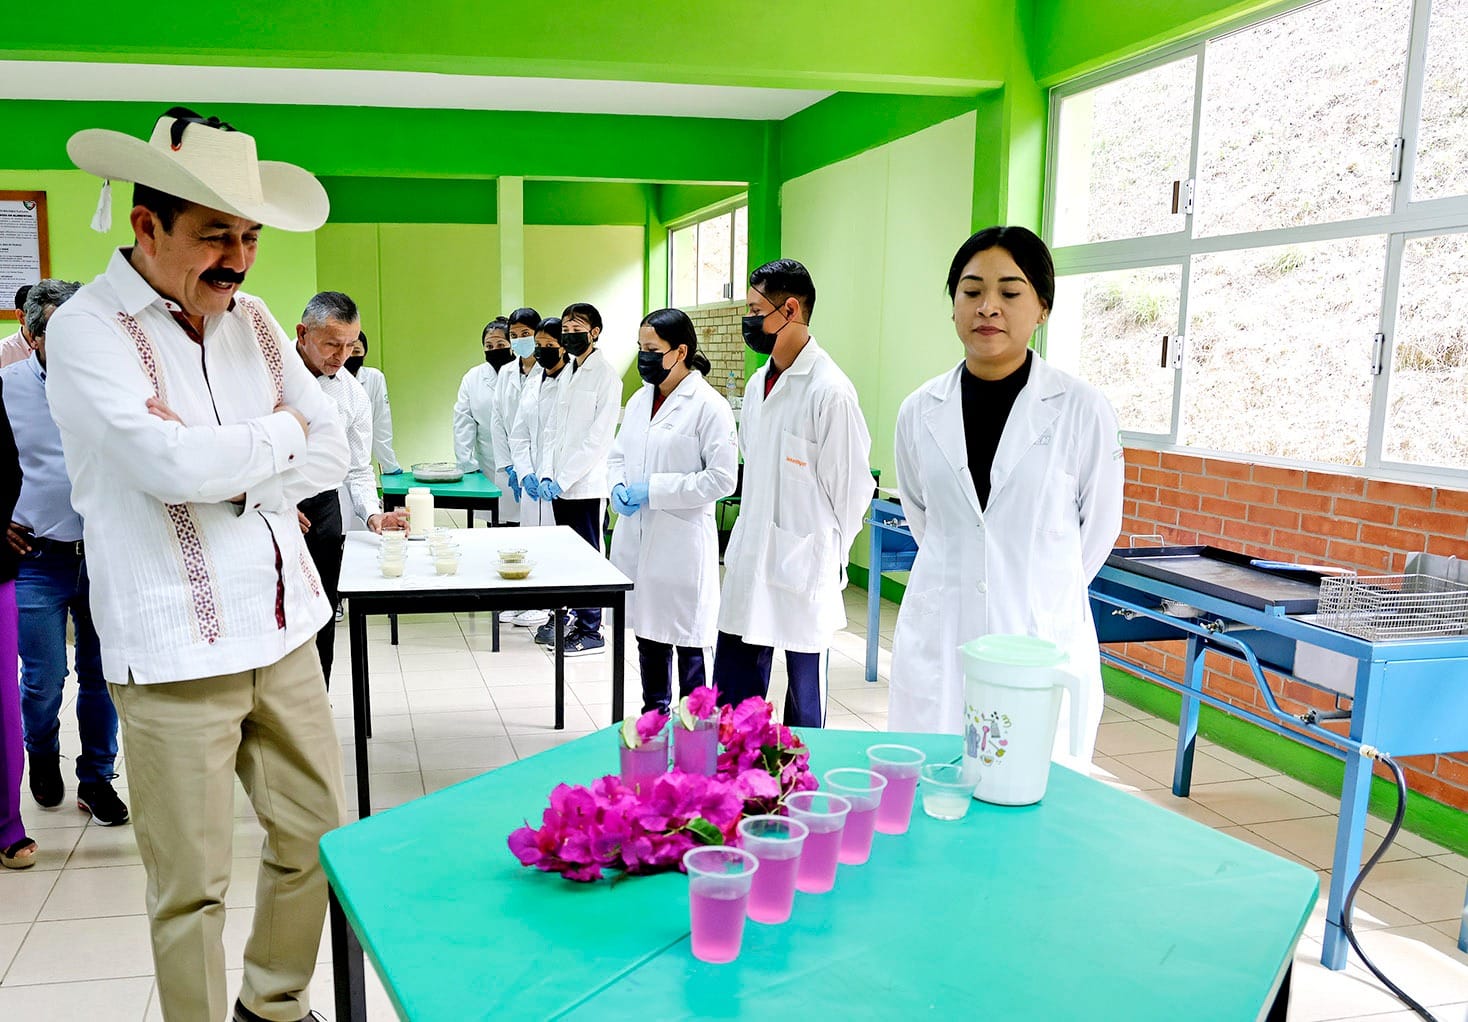 Estudiantes mexiquenses desarrollan proyecto innovador: “Limorada” bebida de bugambilias